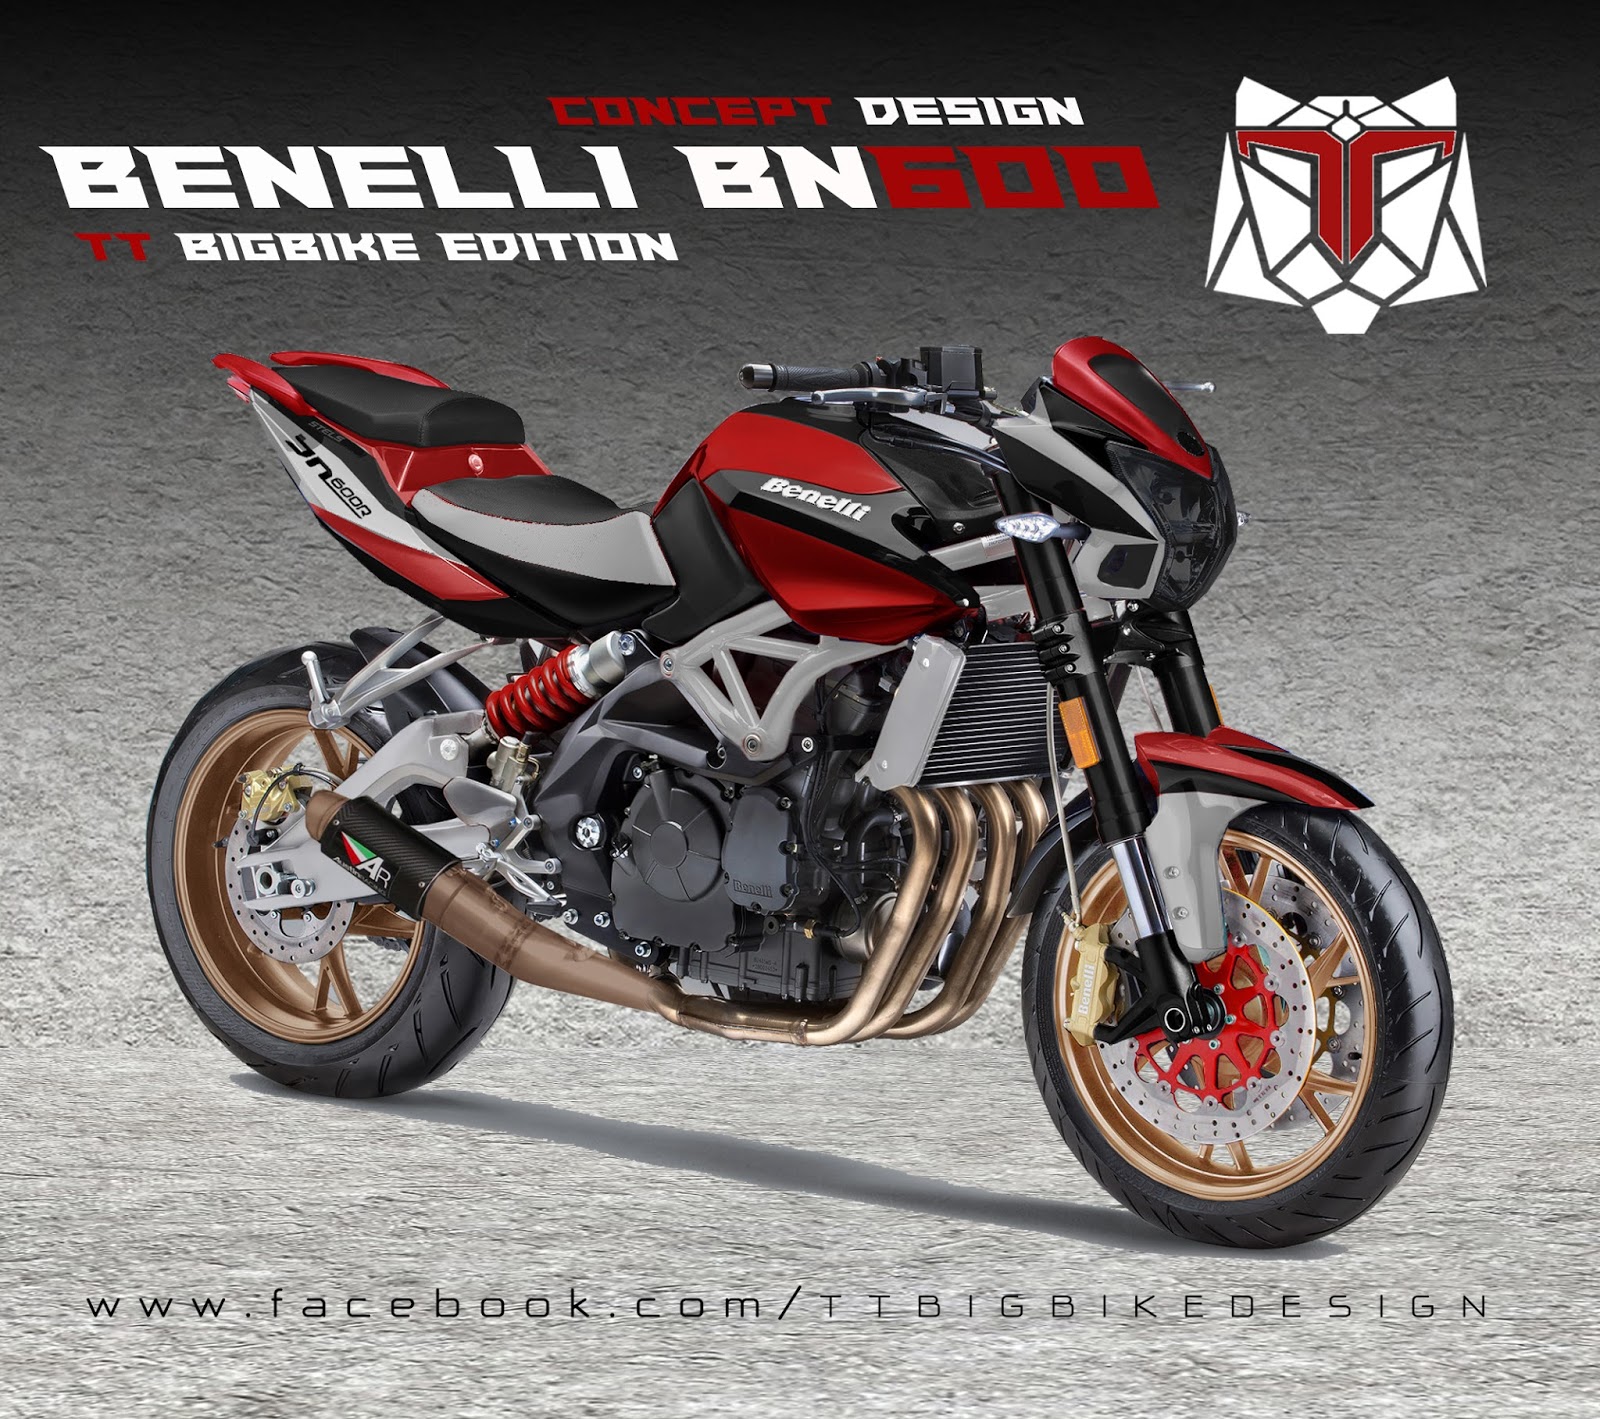 TT BIGBIKE DESIGN: BENELLI BN600 DESIGN CONCEPT #1